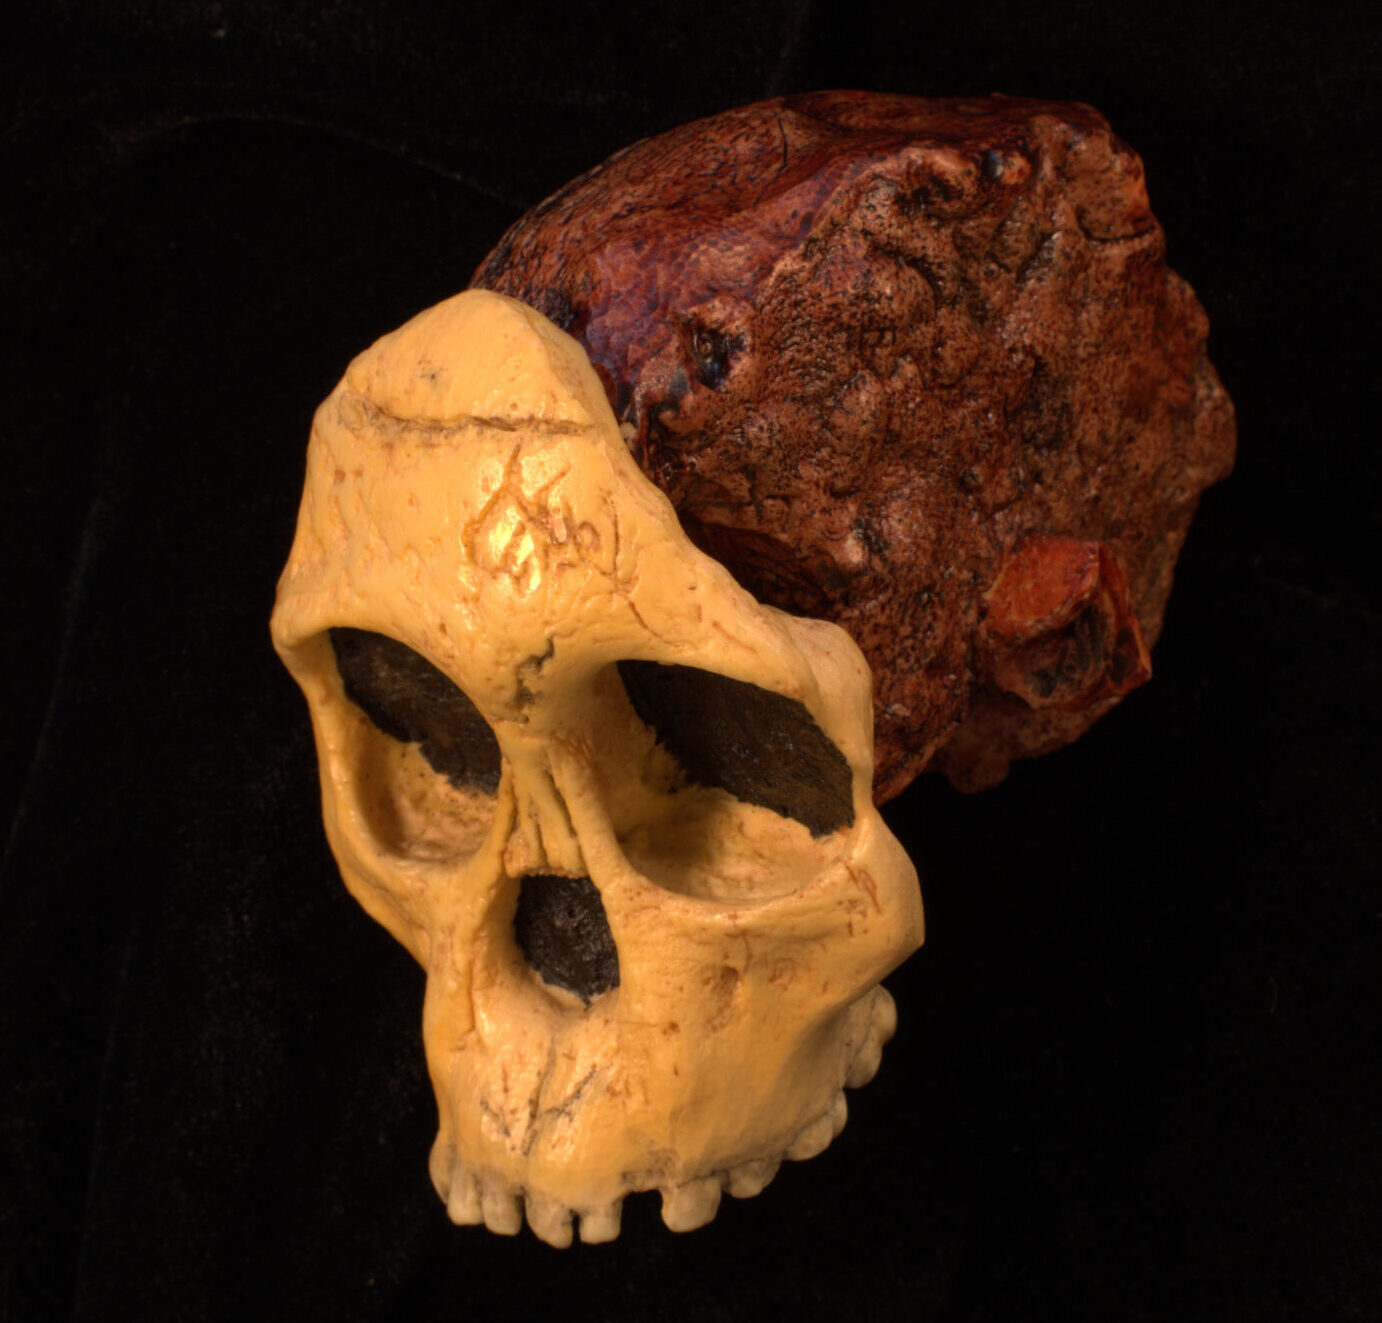 Photograph of an Australopithecus africanus cranium with fossilized brain matter at three-quarter view.